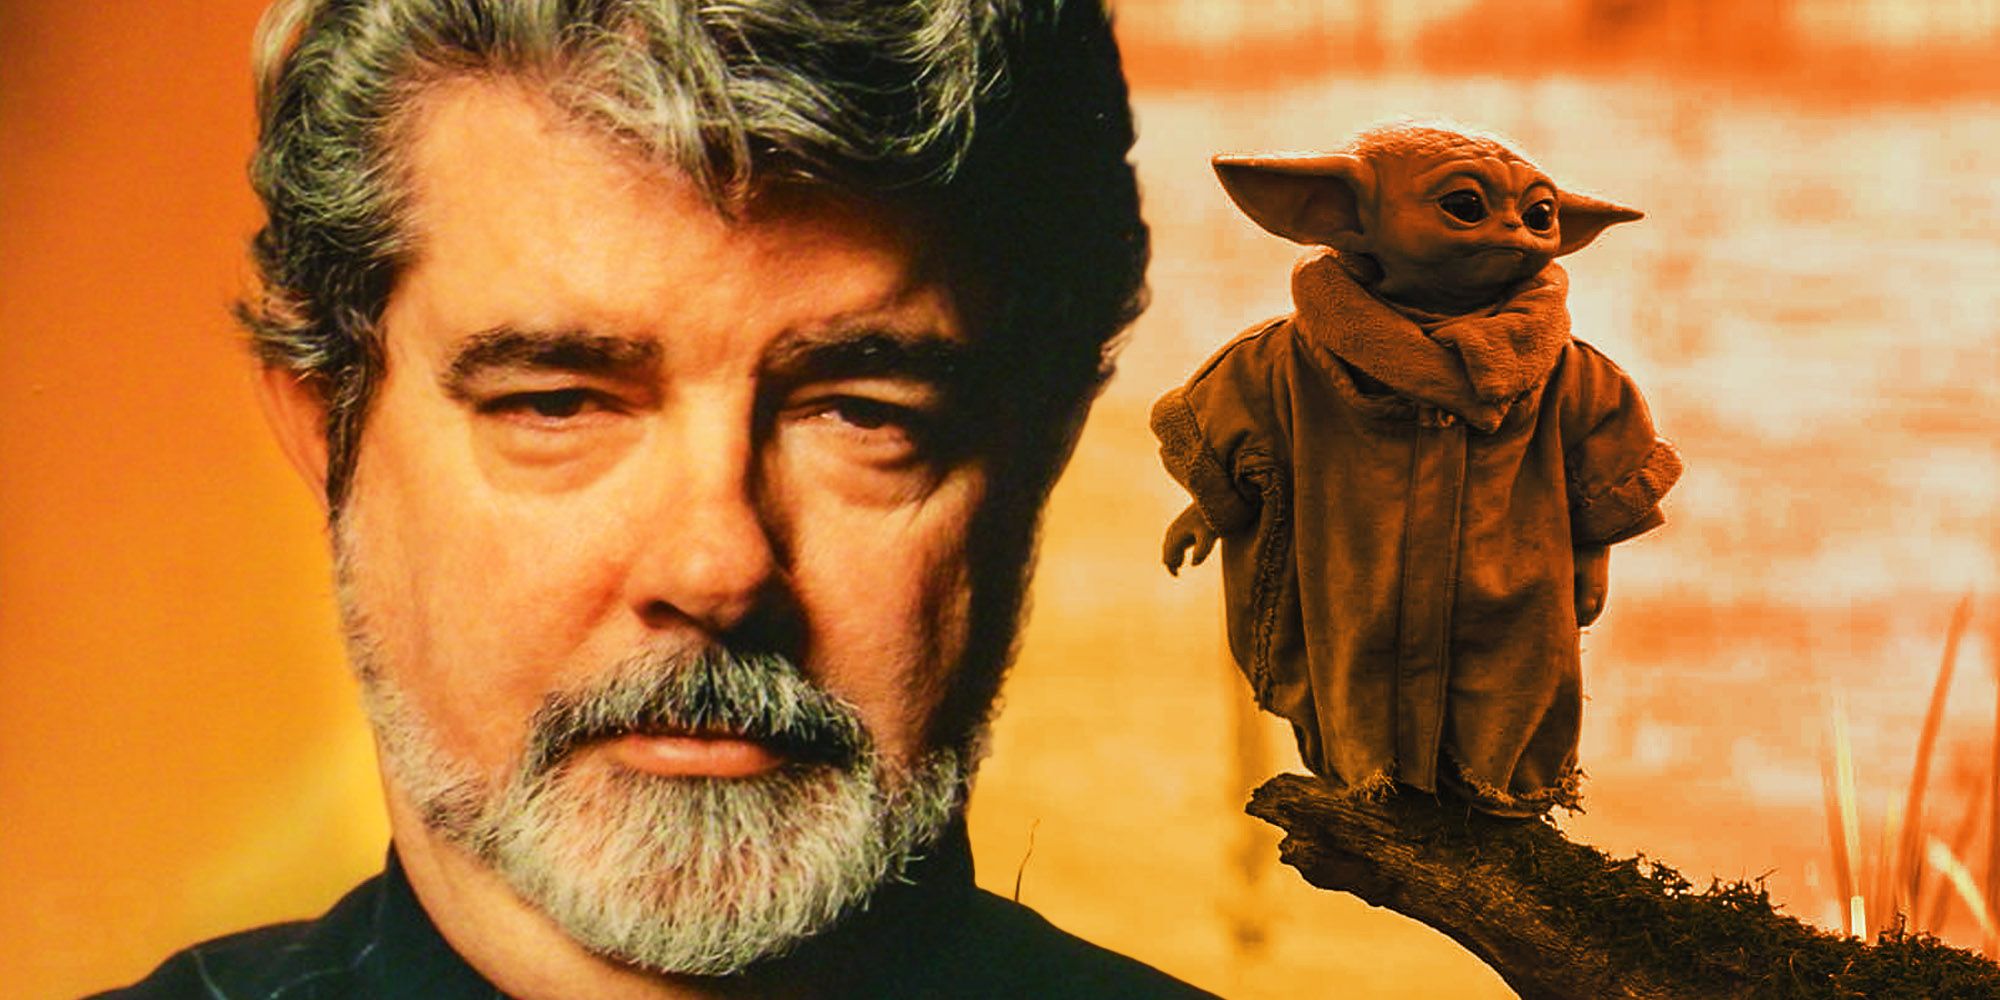 Star Wars Book of boba fett Fulfilled George Lucas Grogu Wish By Ignoring It